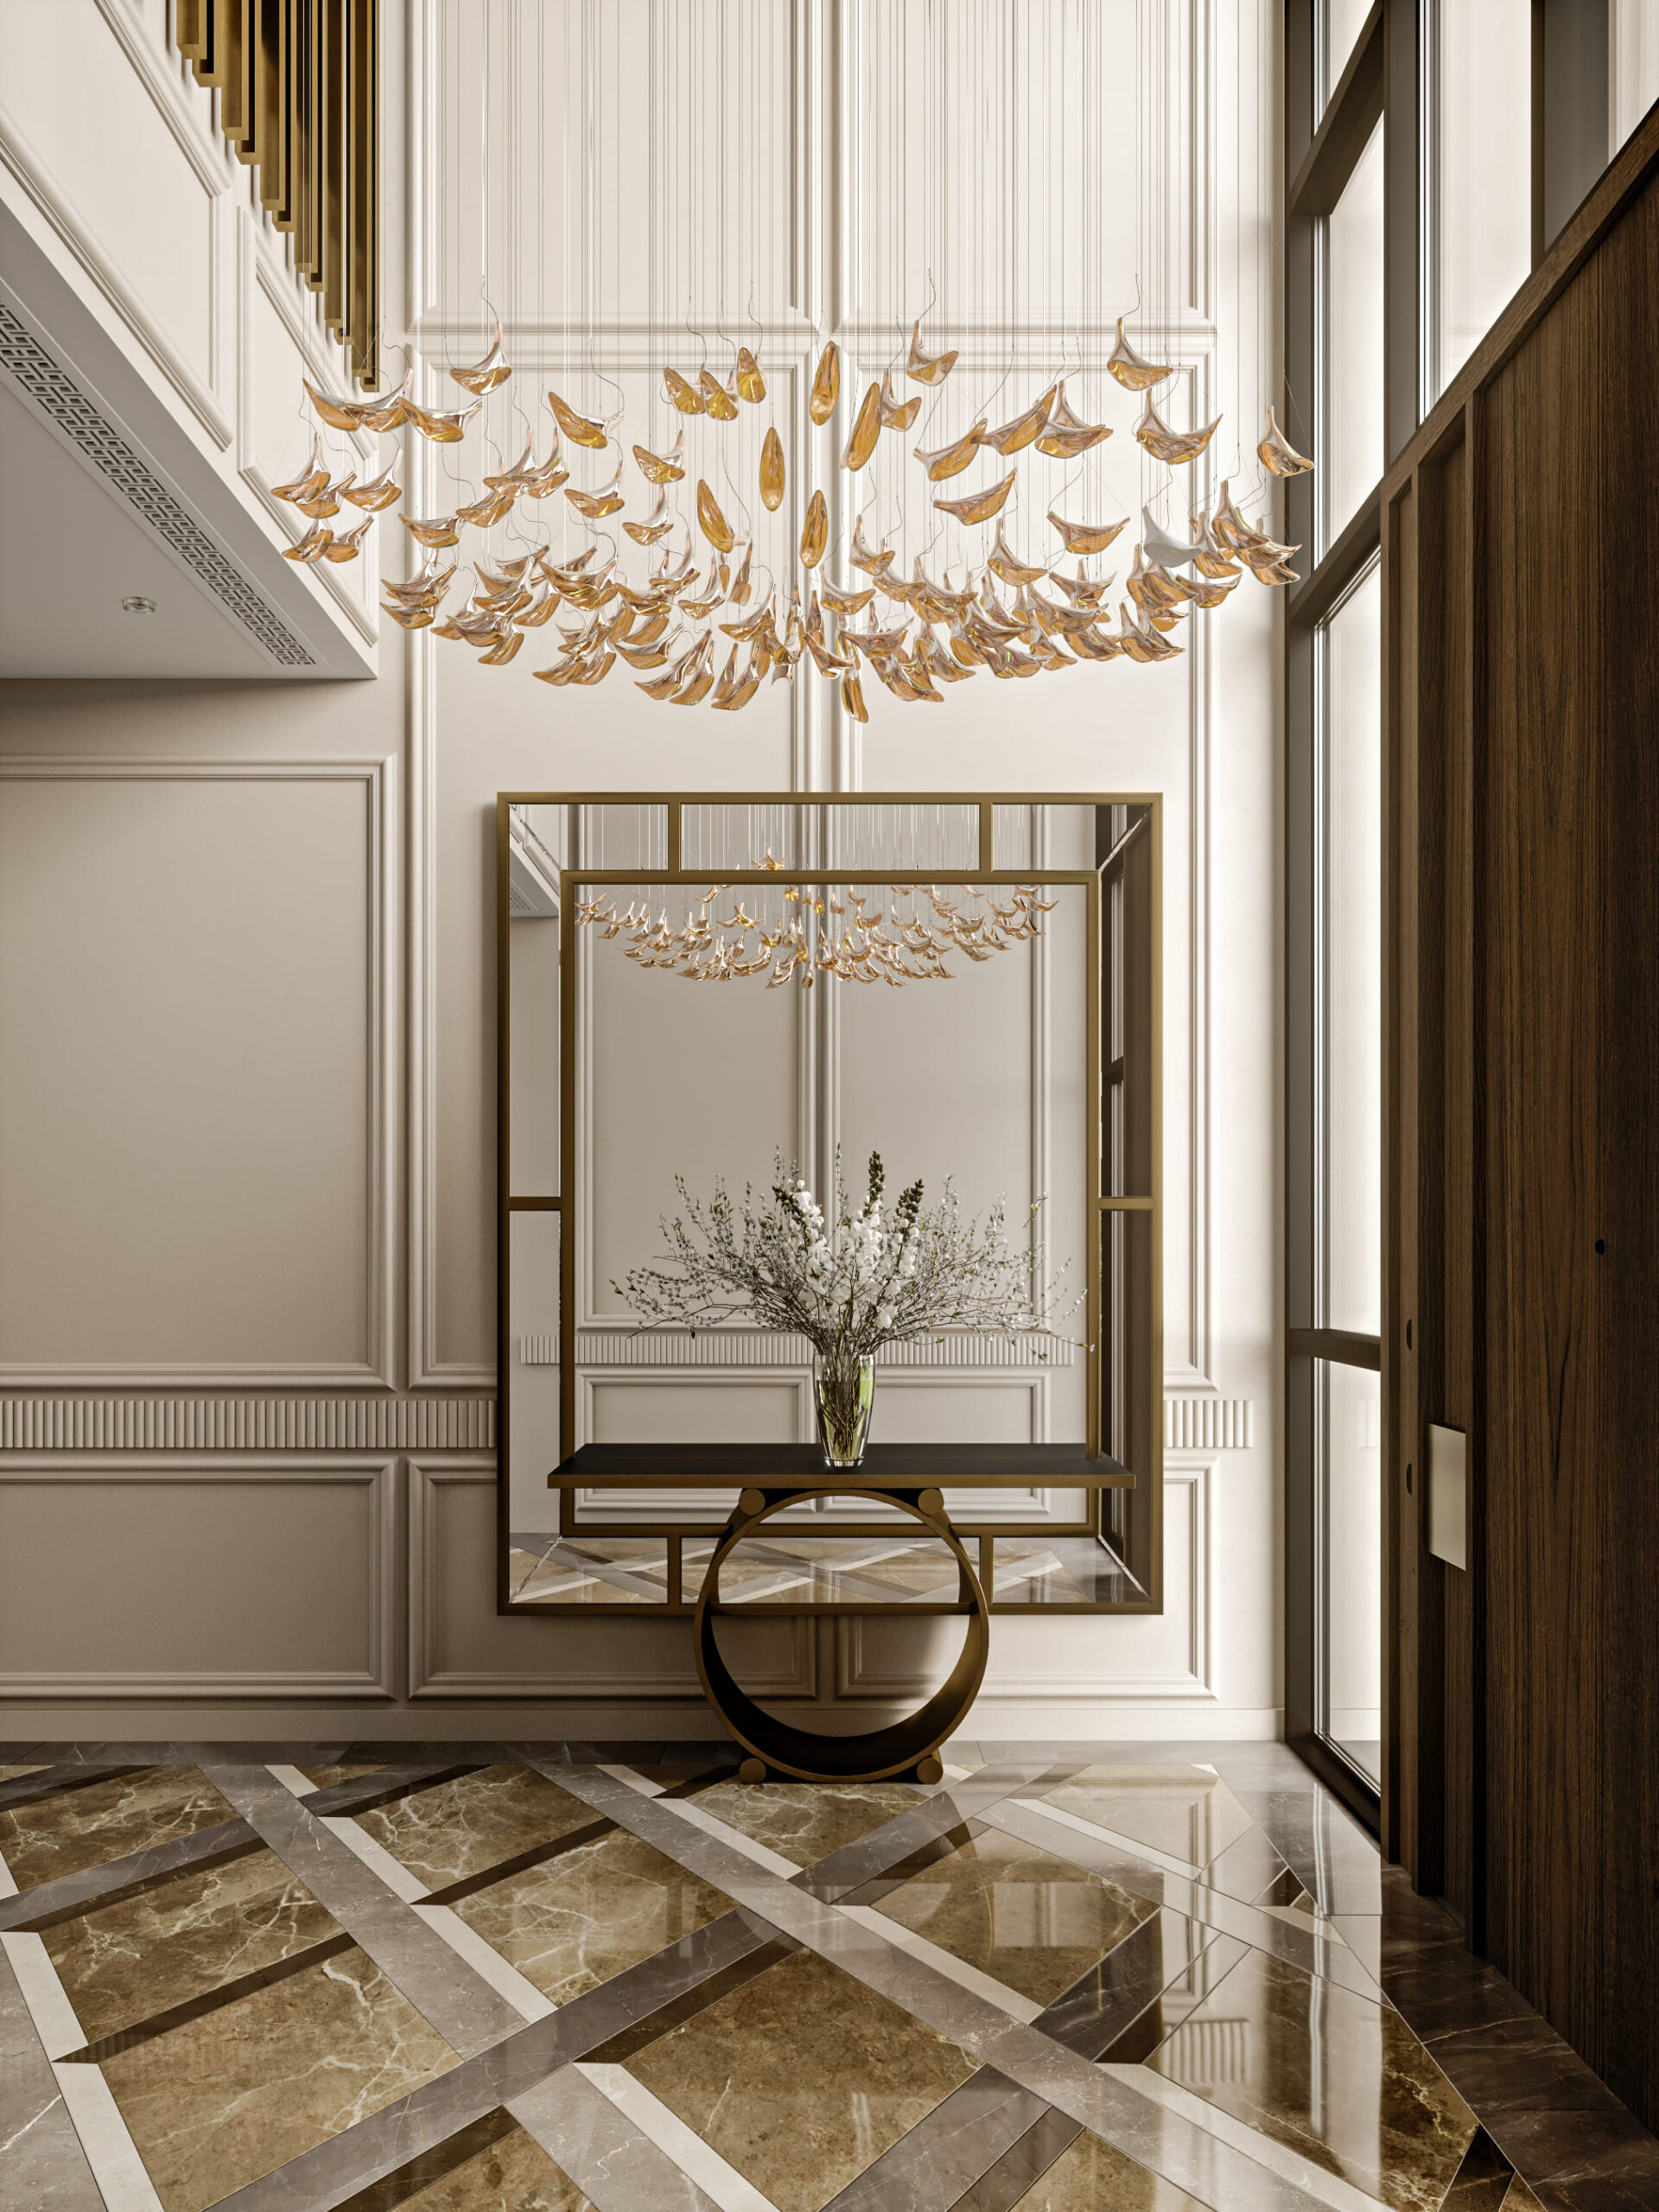 Interior design oth villa jumeirah pearl by kg design